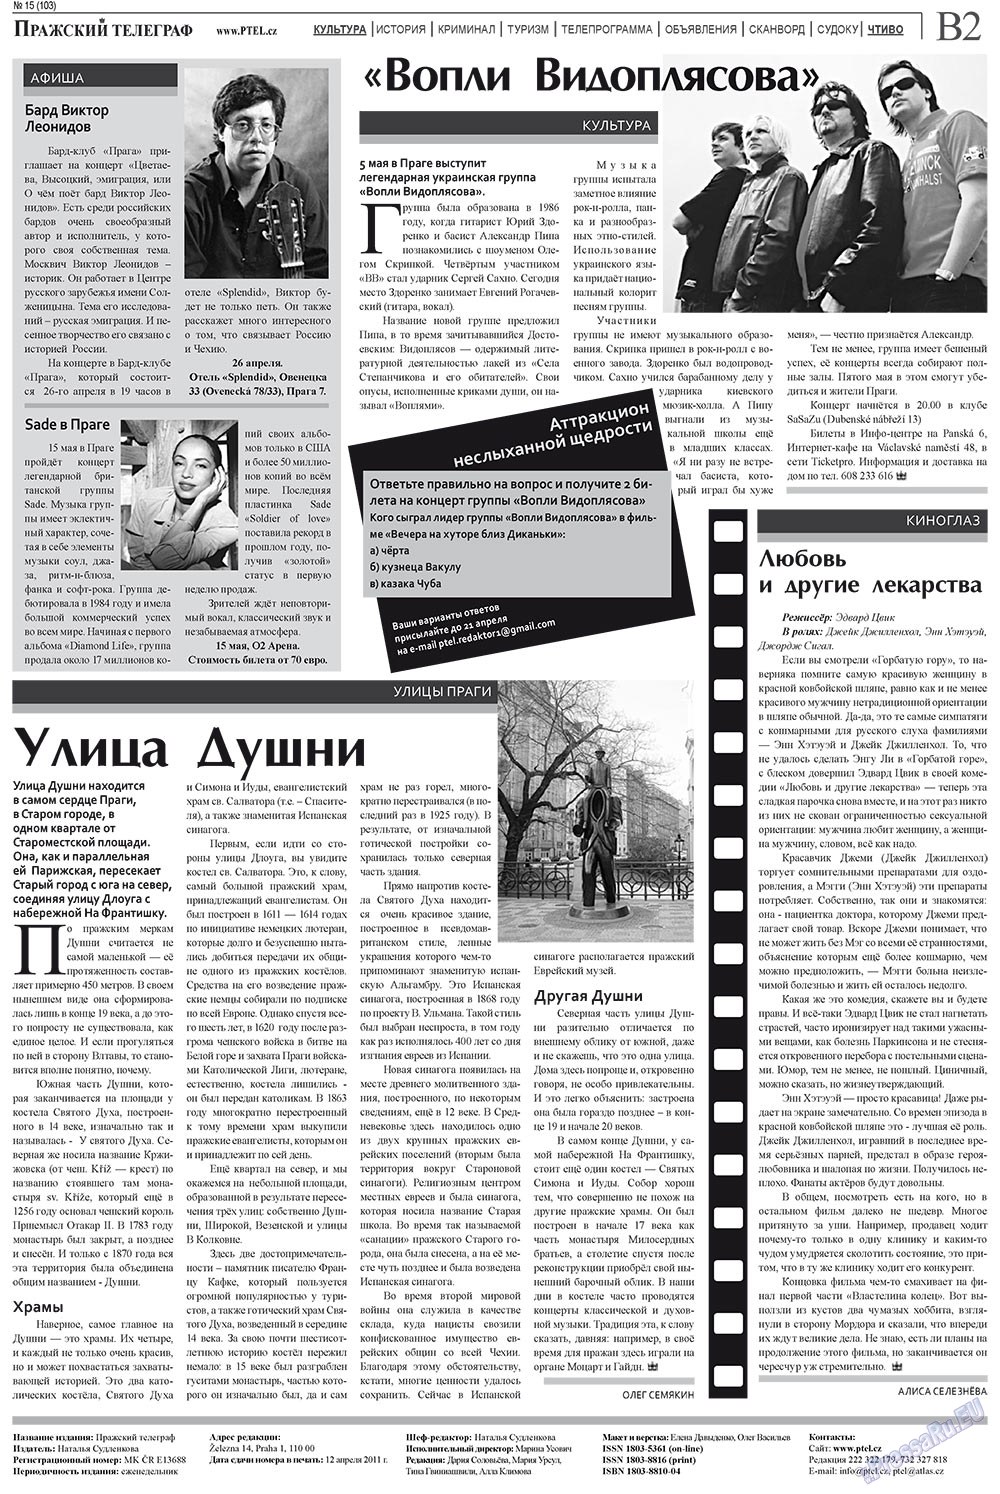 Пражский телеграф, газета. 2011 №15 стр.10